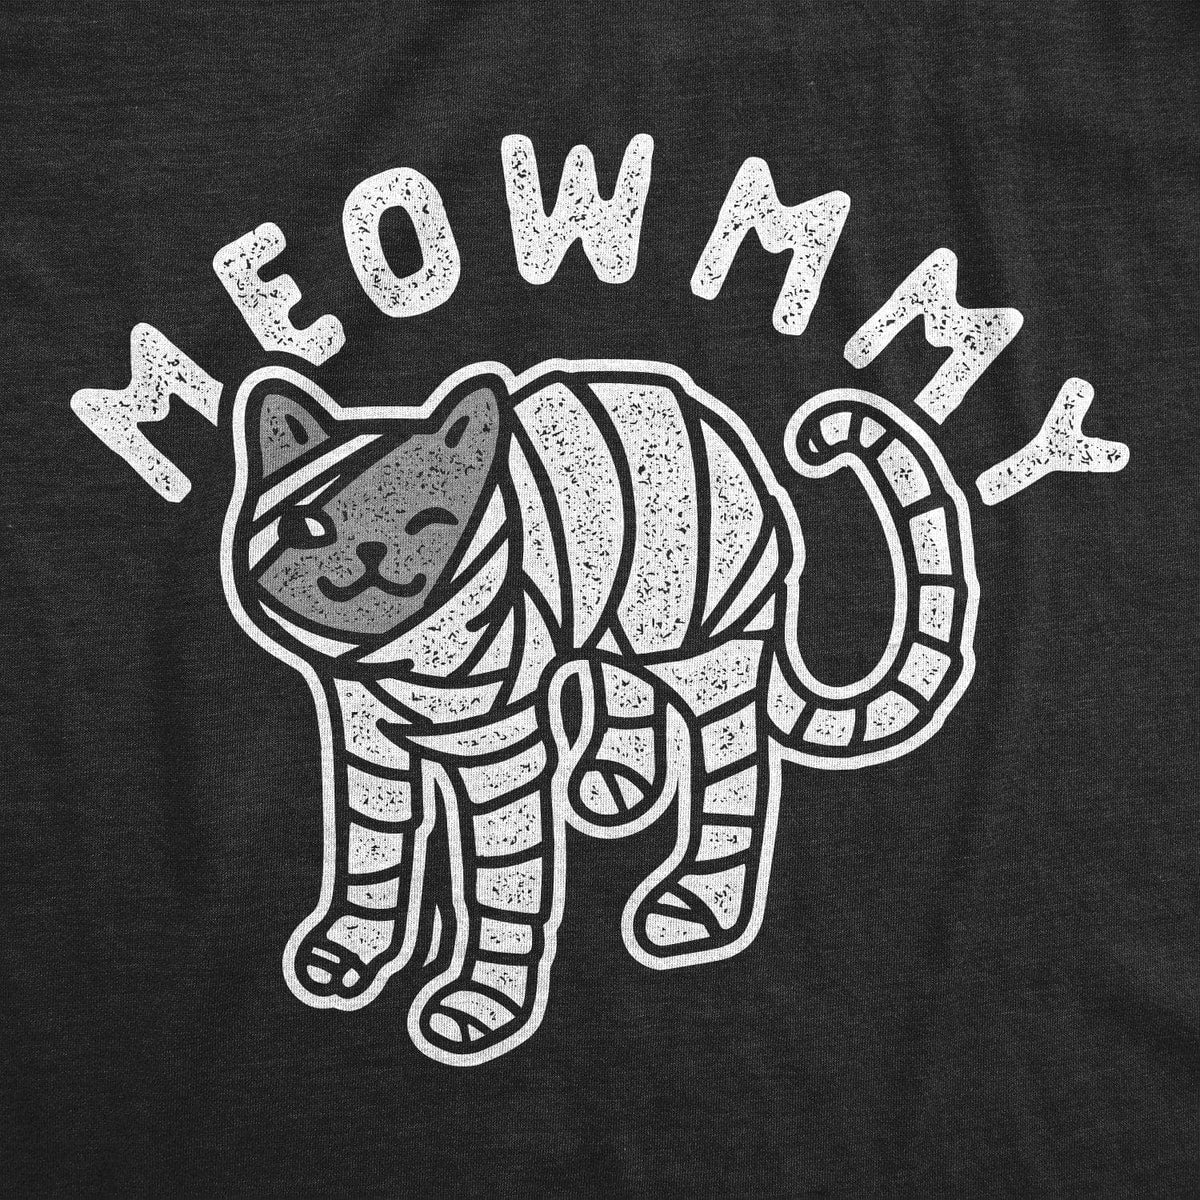 Meowmmy Women&#39;s Tshirt - Crazy Dog T-Shirts